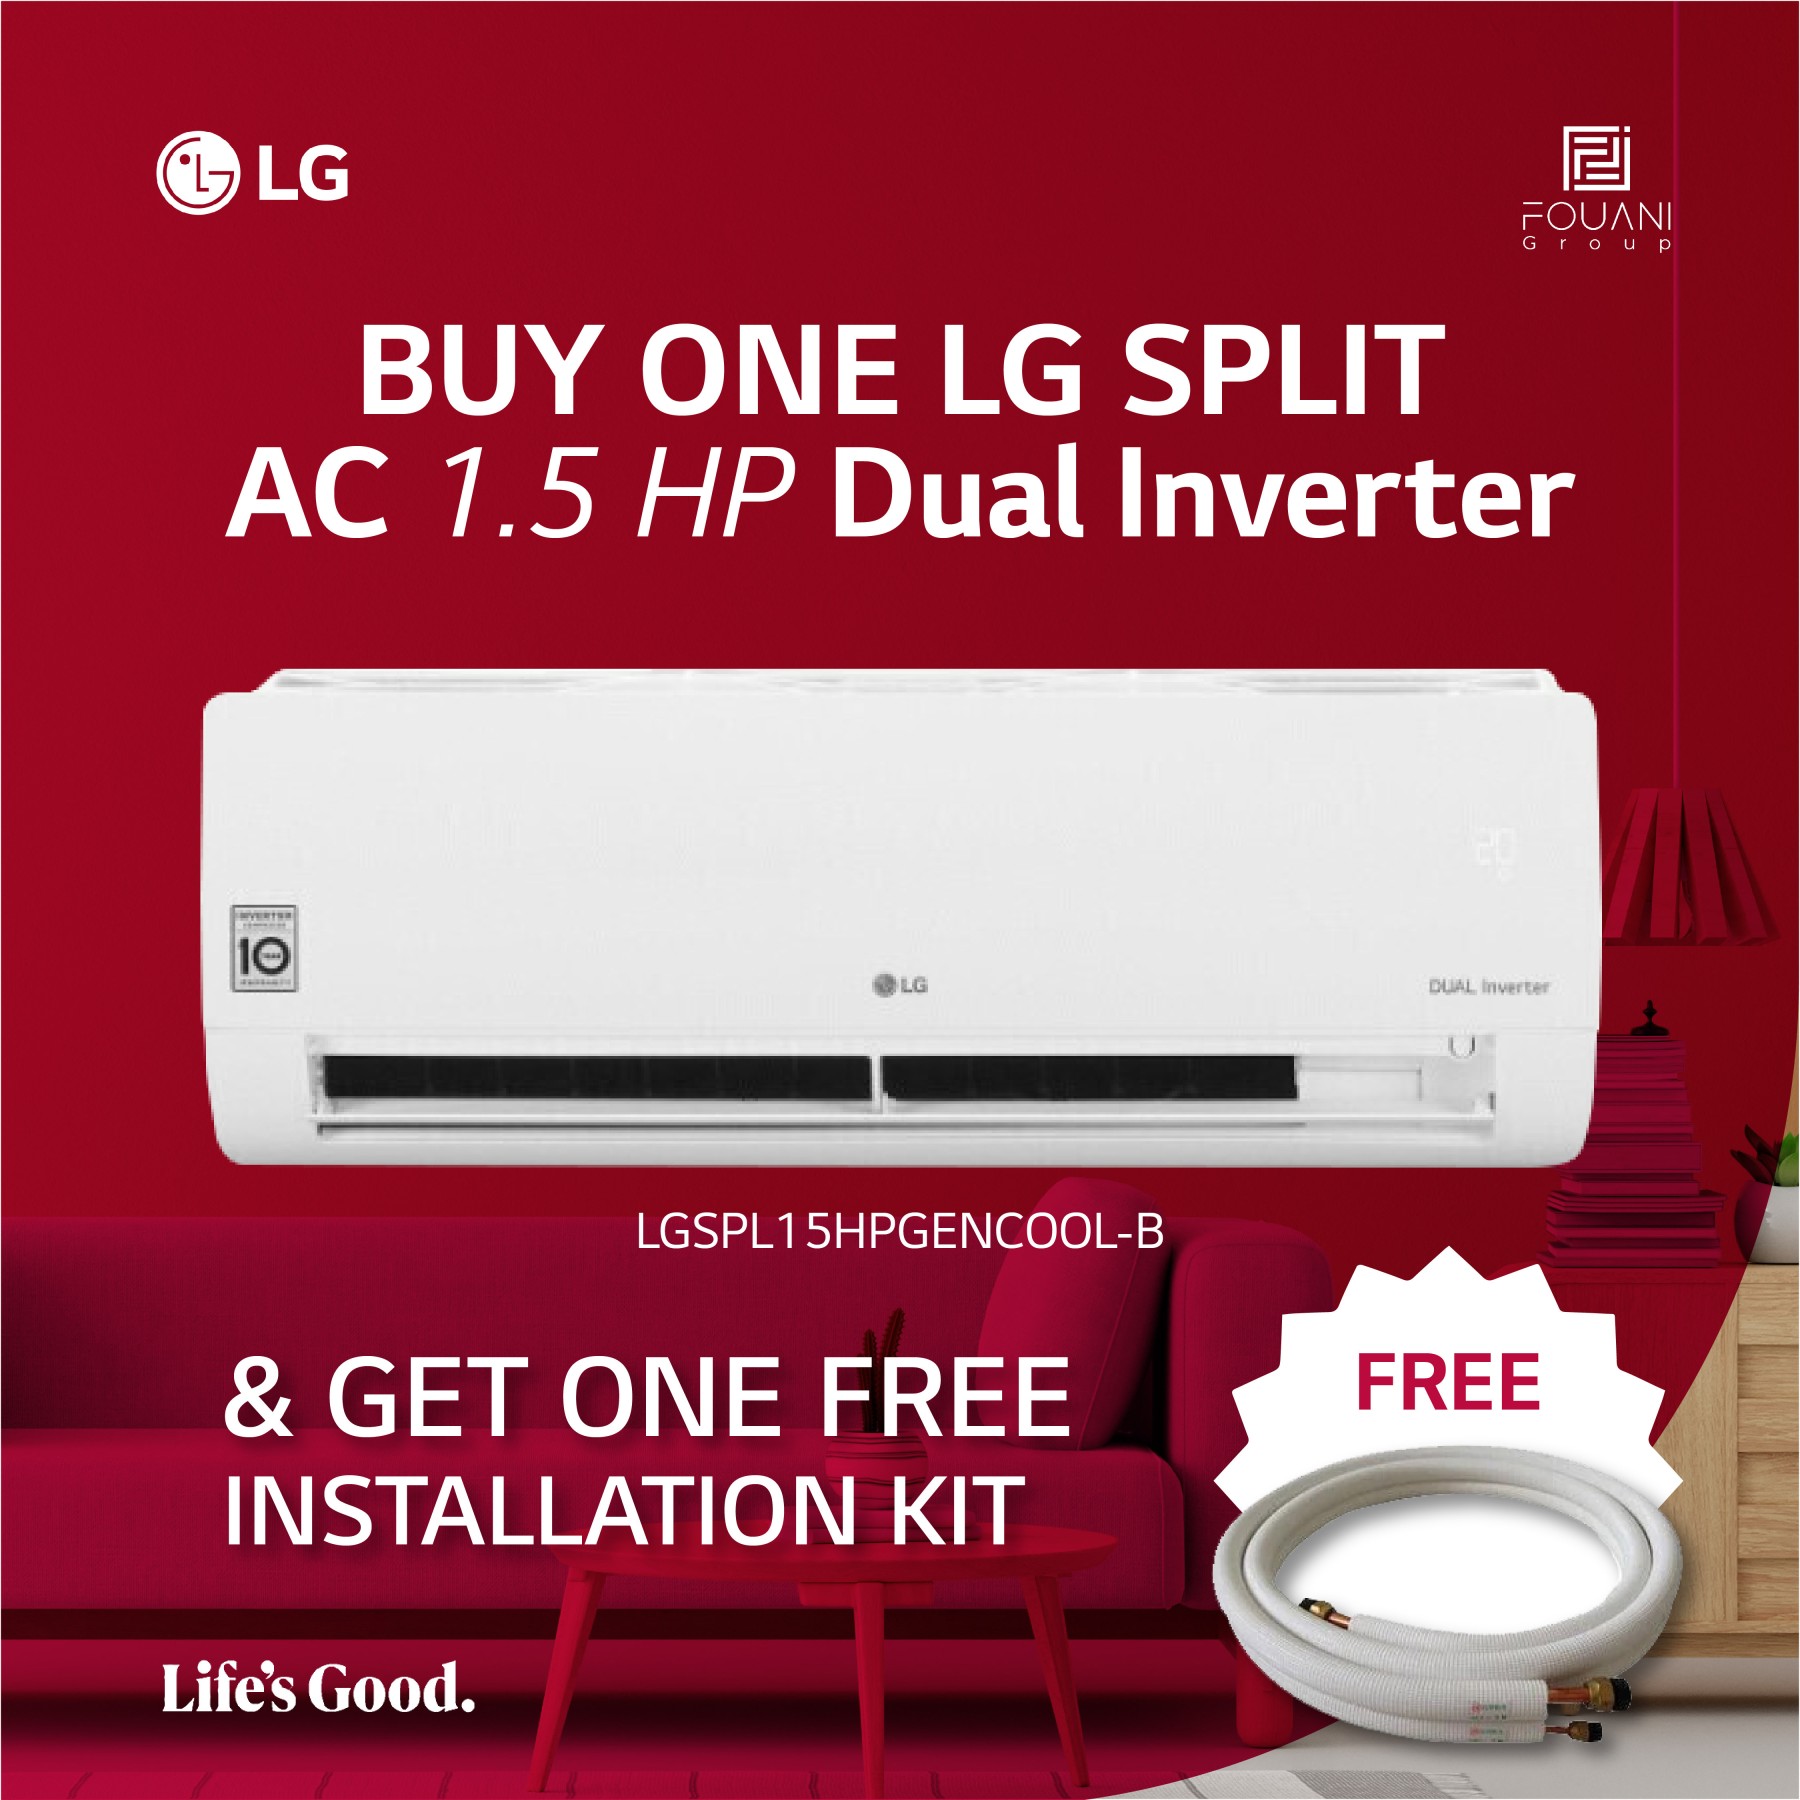 LG Split AC 1.5HP Dual Inverter